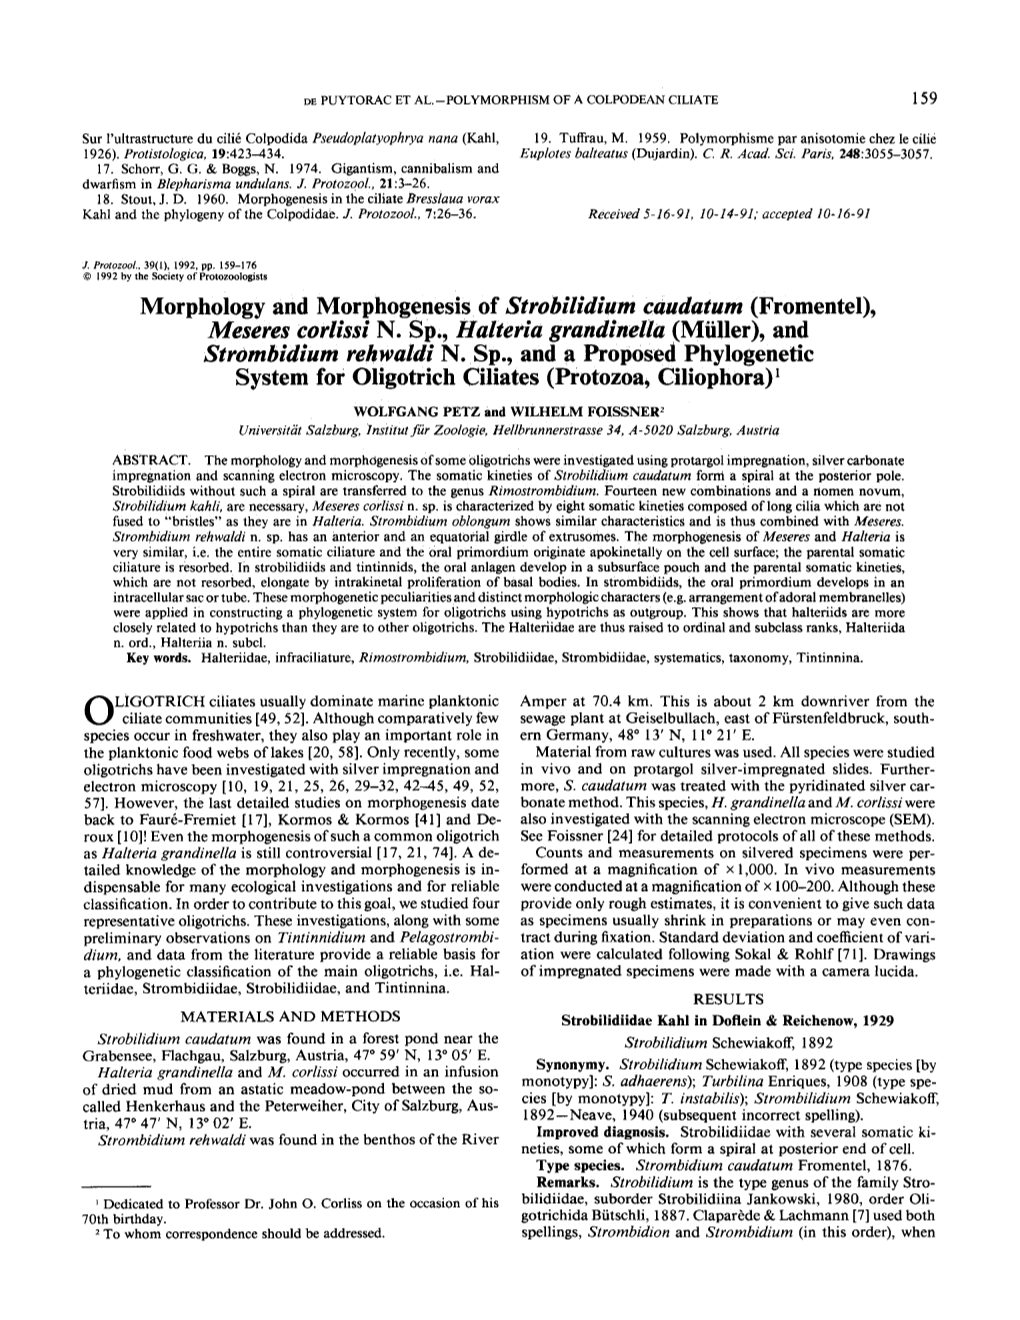 Morphology and Morphogenesis of Strobilidium Caudatum (Fromentel), Meseres Corlissi N. Sp., Halteria Grandinella (Müller)